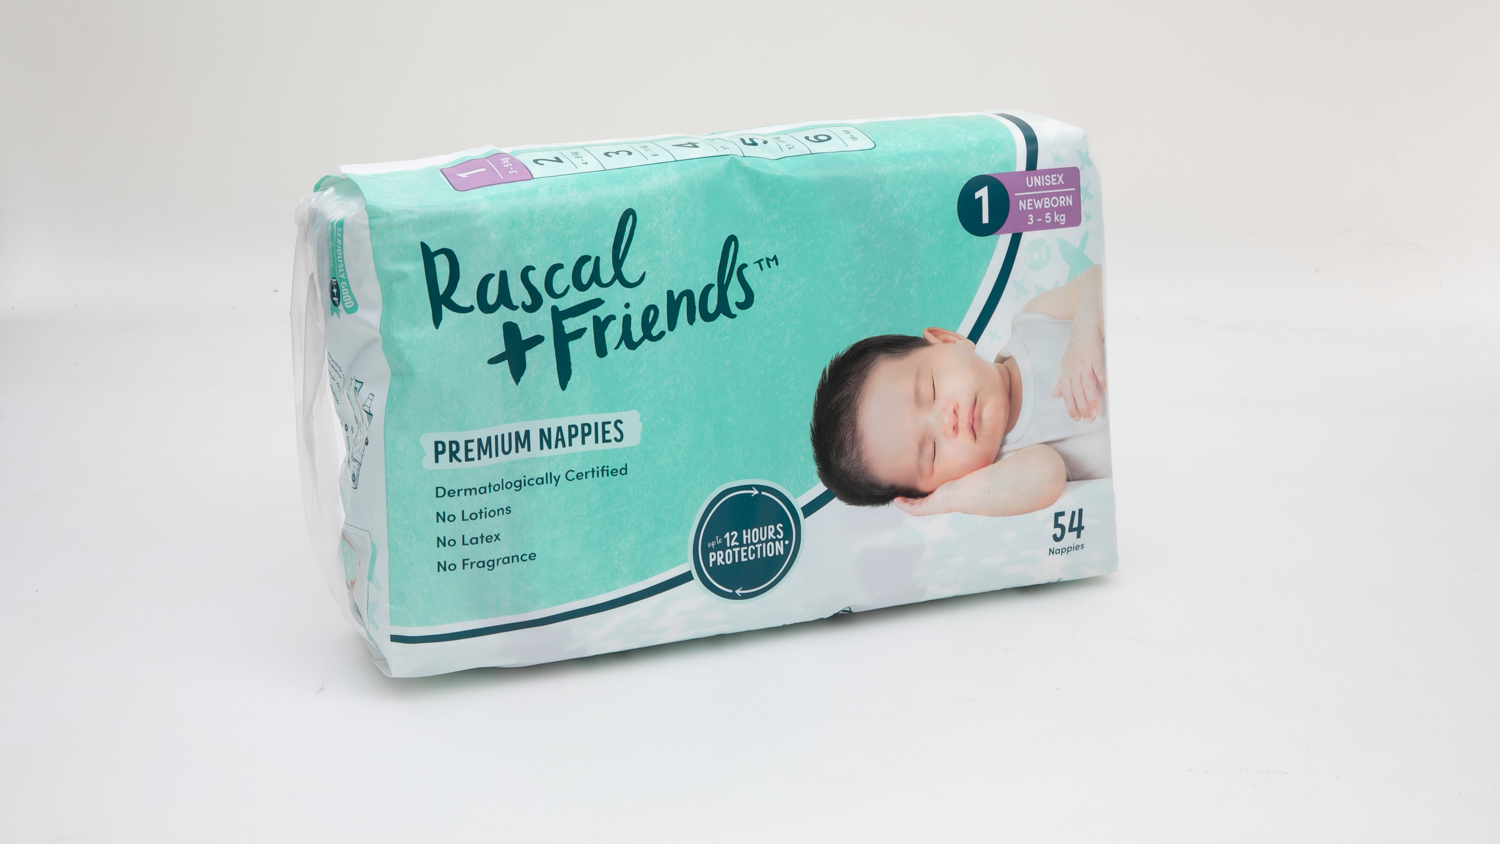 Rascal + Friends Premium Nappies Unisex Newborn Size 1 Review